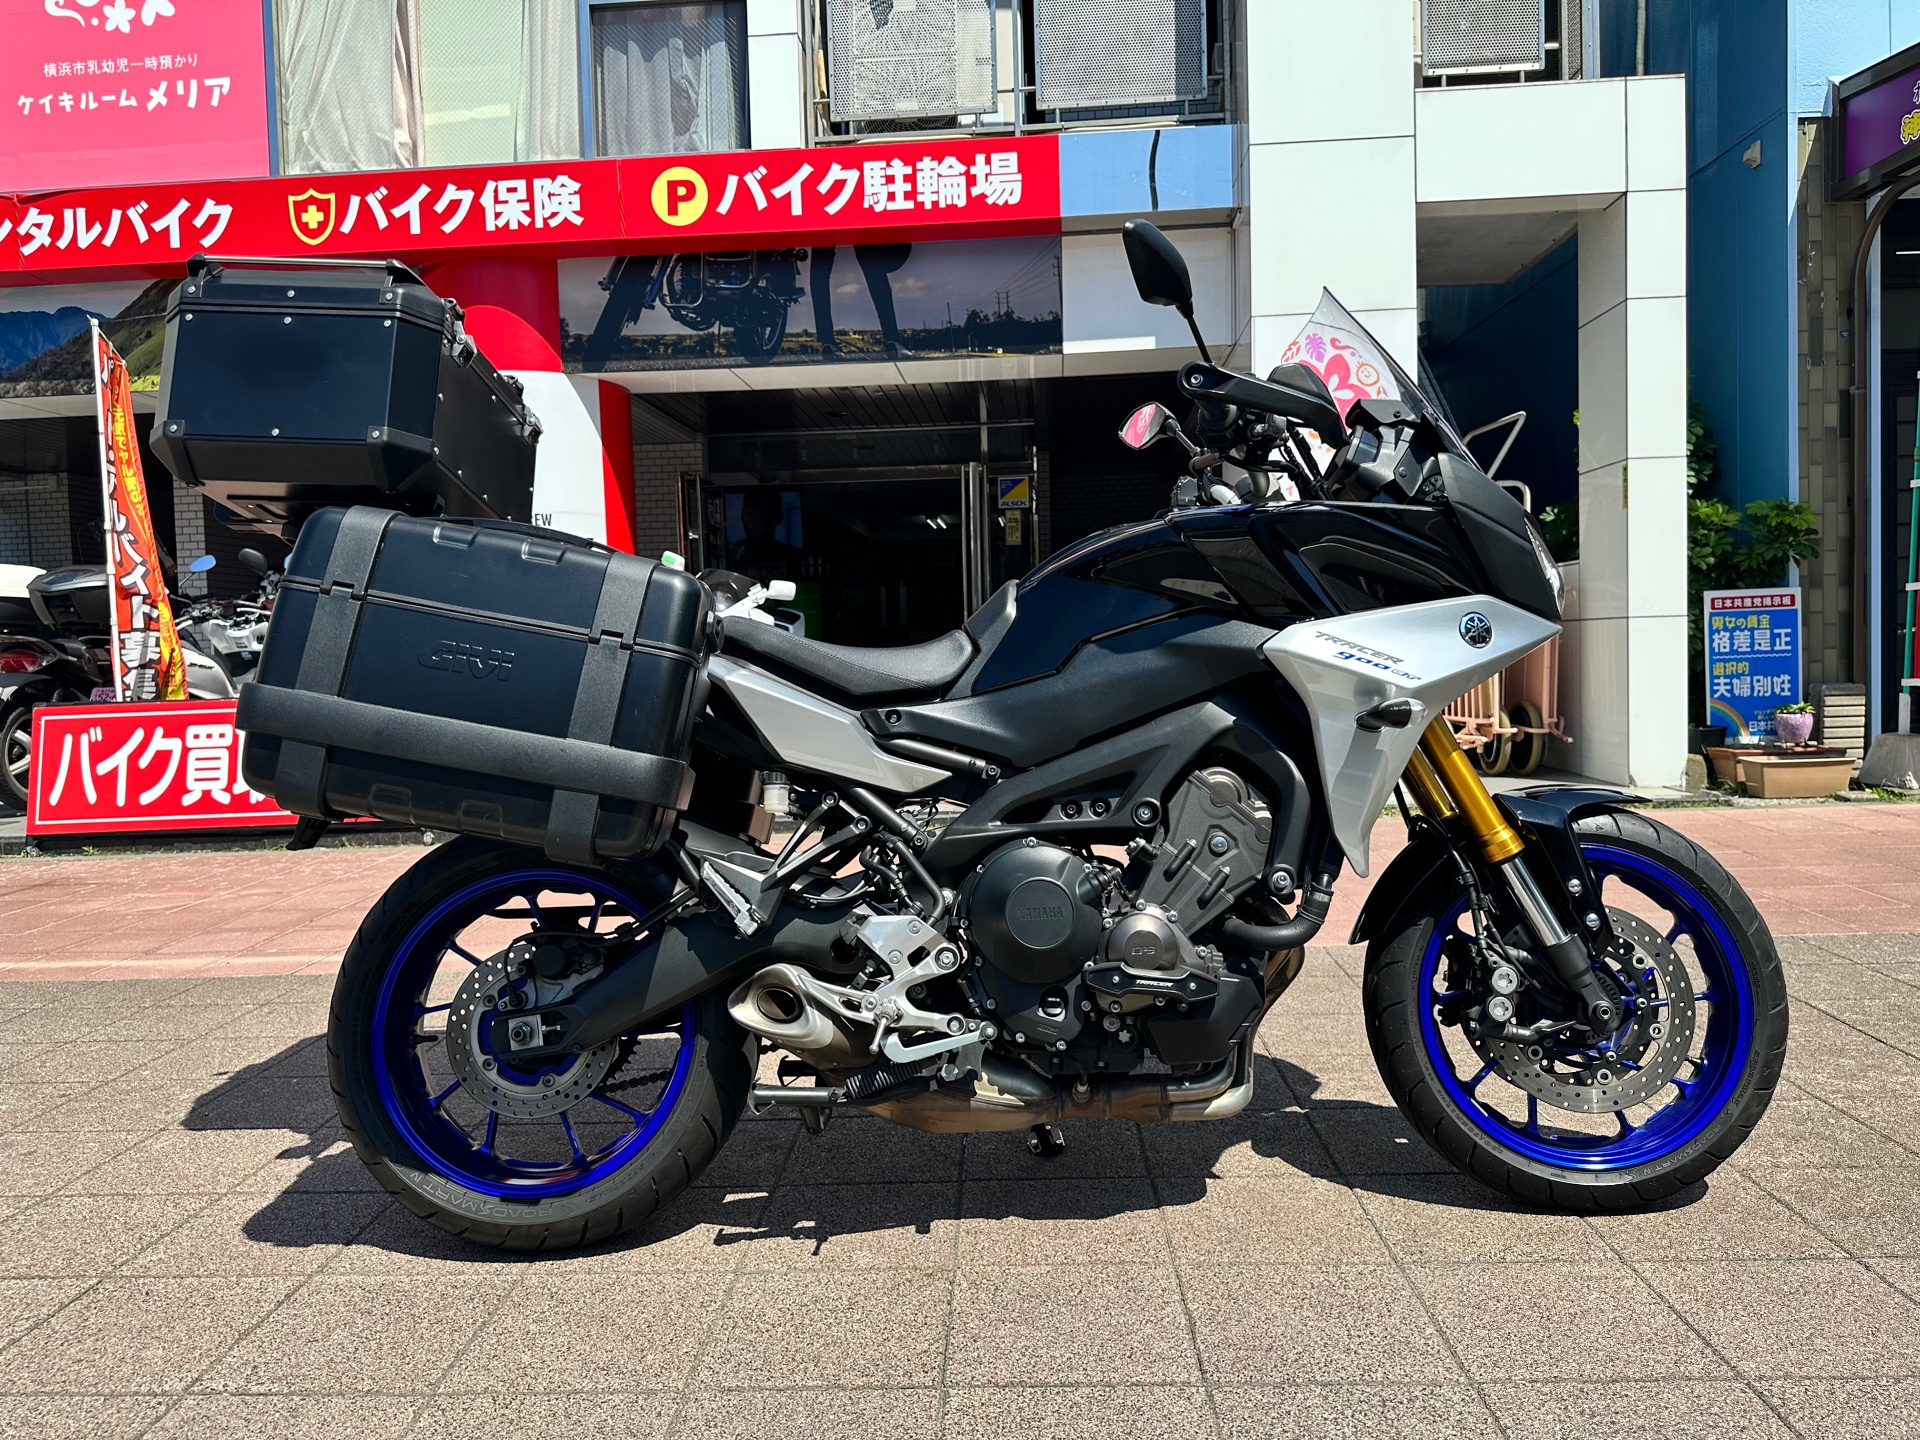 Мотоцикл Yamaha MT-09 TRACER 900GT (32021км)